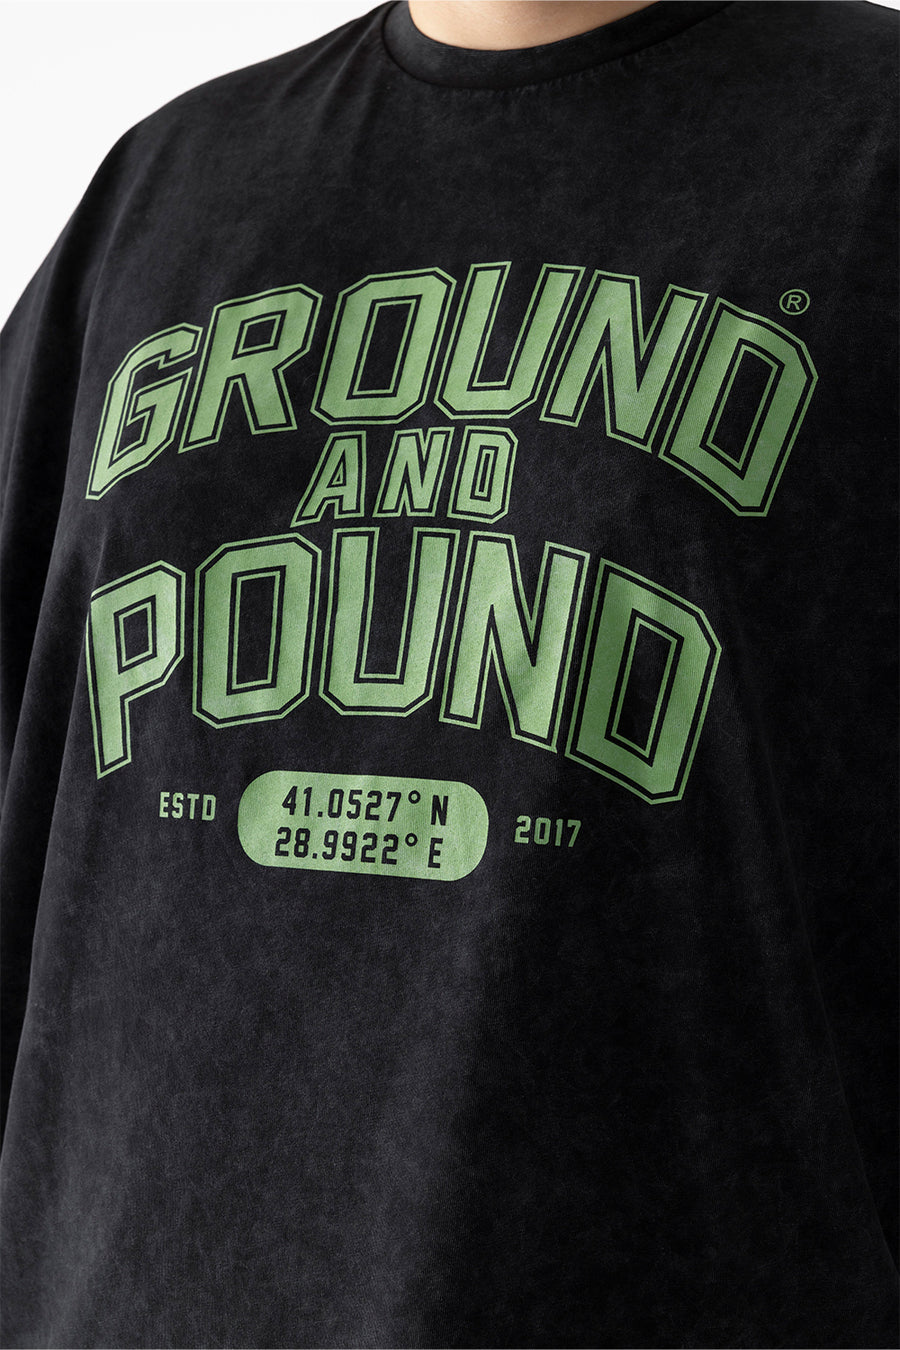 Ground And Pound Eskitme Yıkamalı Oversize T-Shirt Siyah